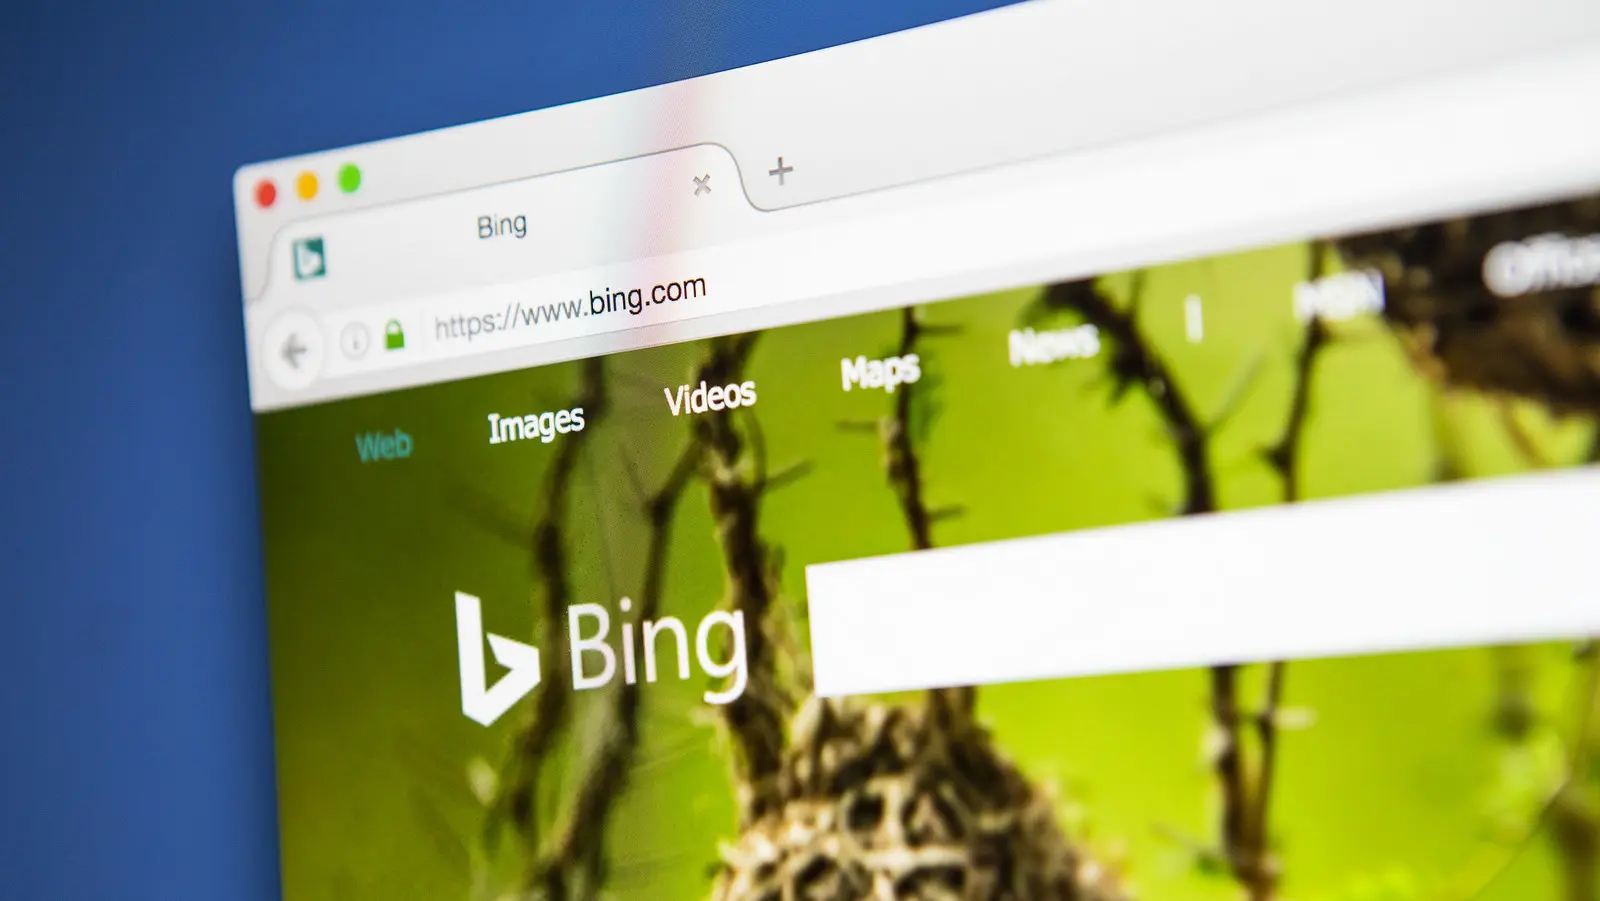 Vale a pena trocar o navegador Google pelo navegador Bing com ChatGPT